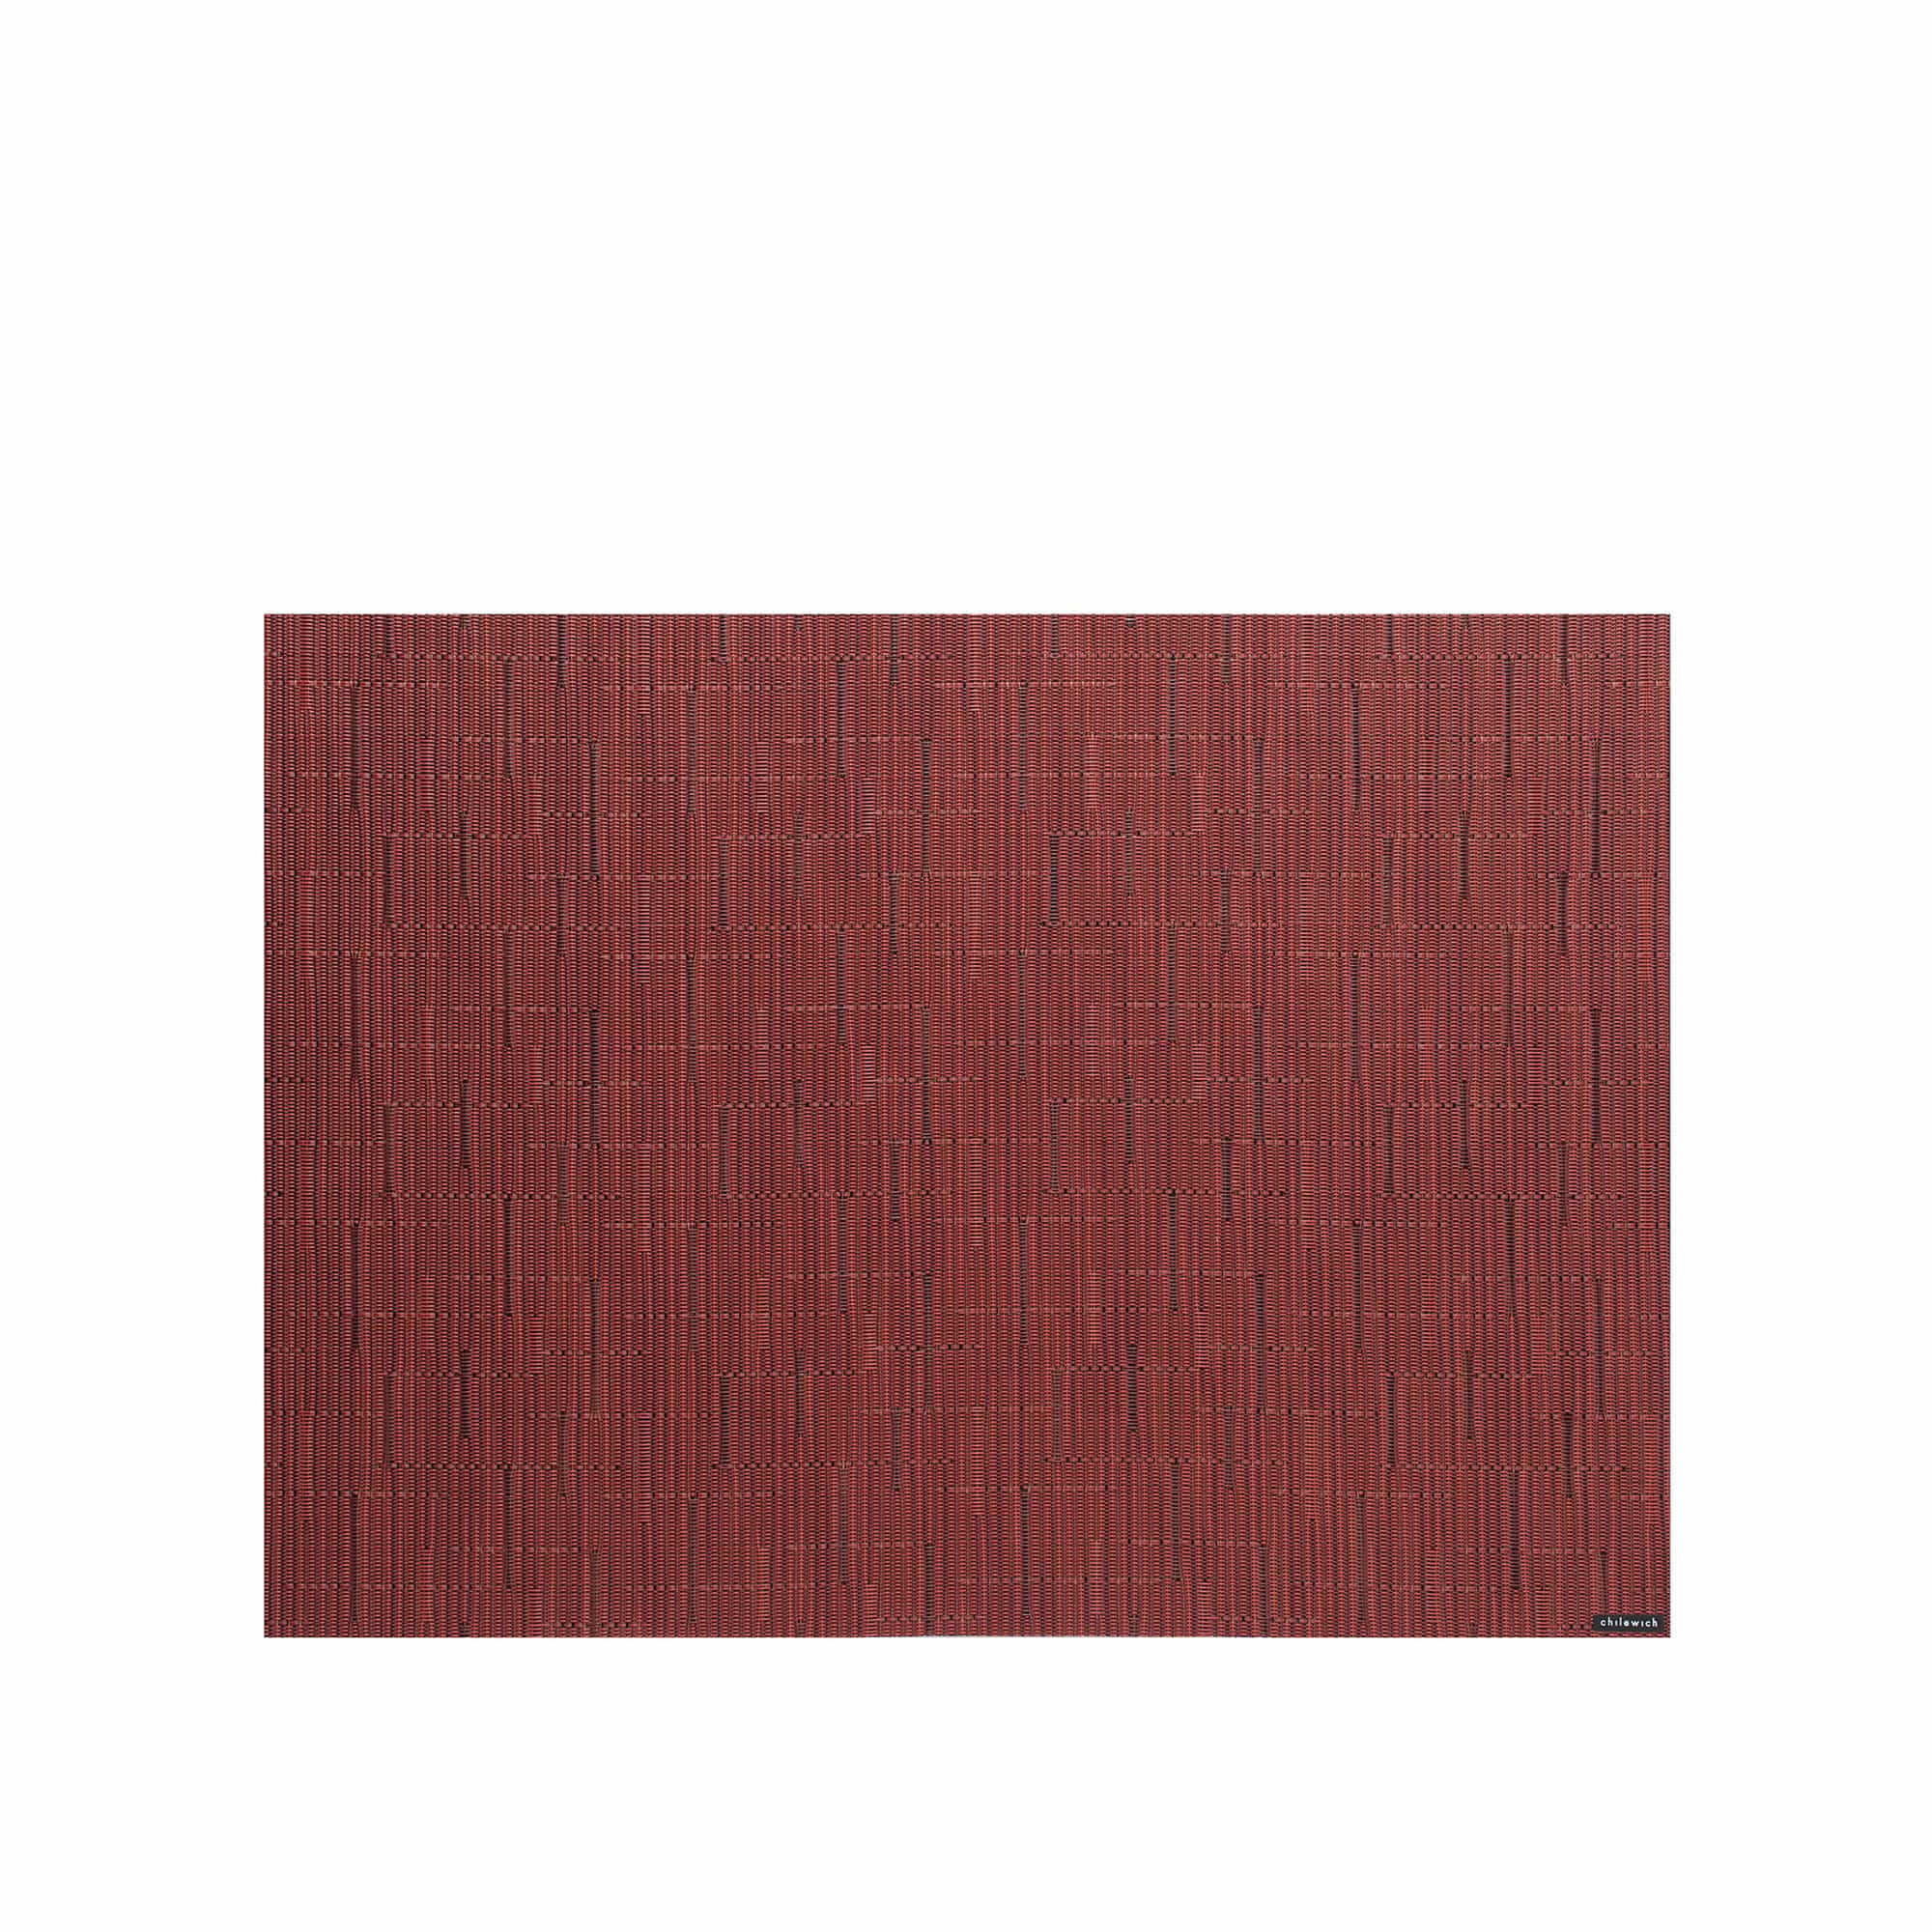 Bamboo 36 x 48 cm - Cranberry